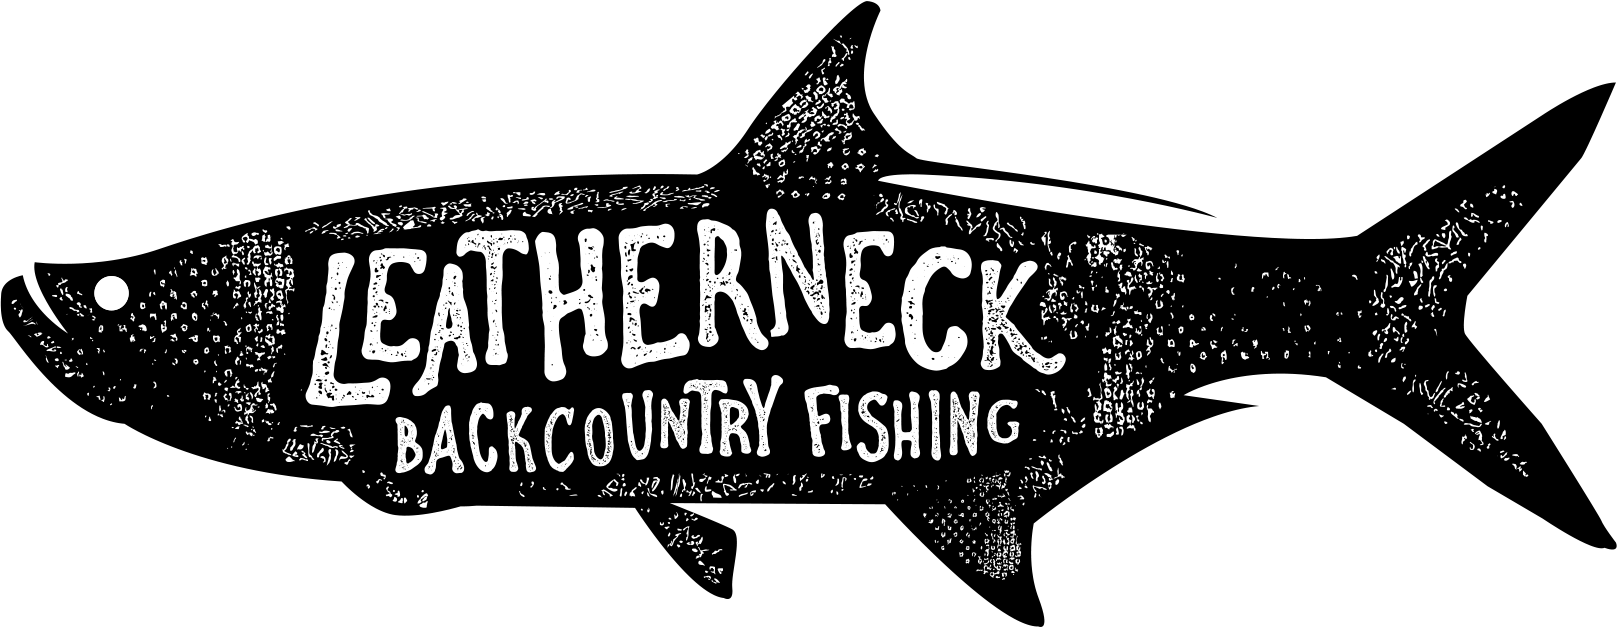 Leatherneck Backcountry Fishing LLC